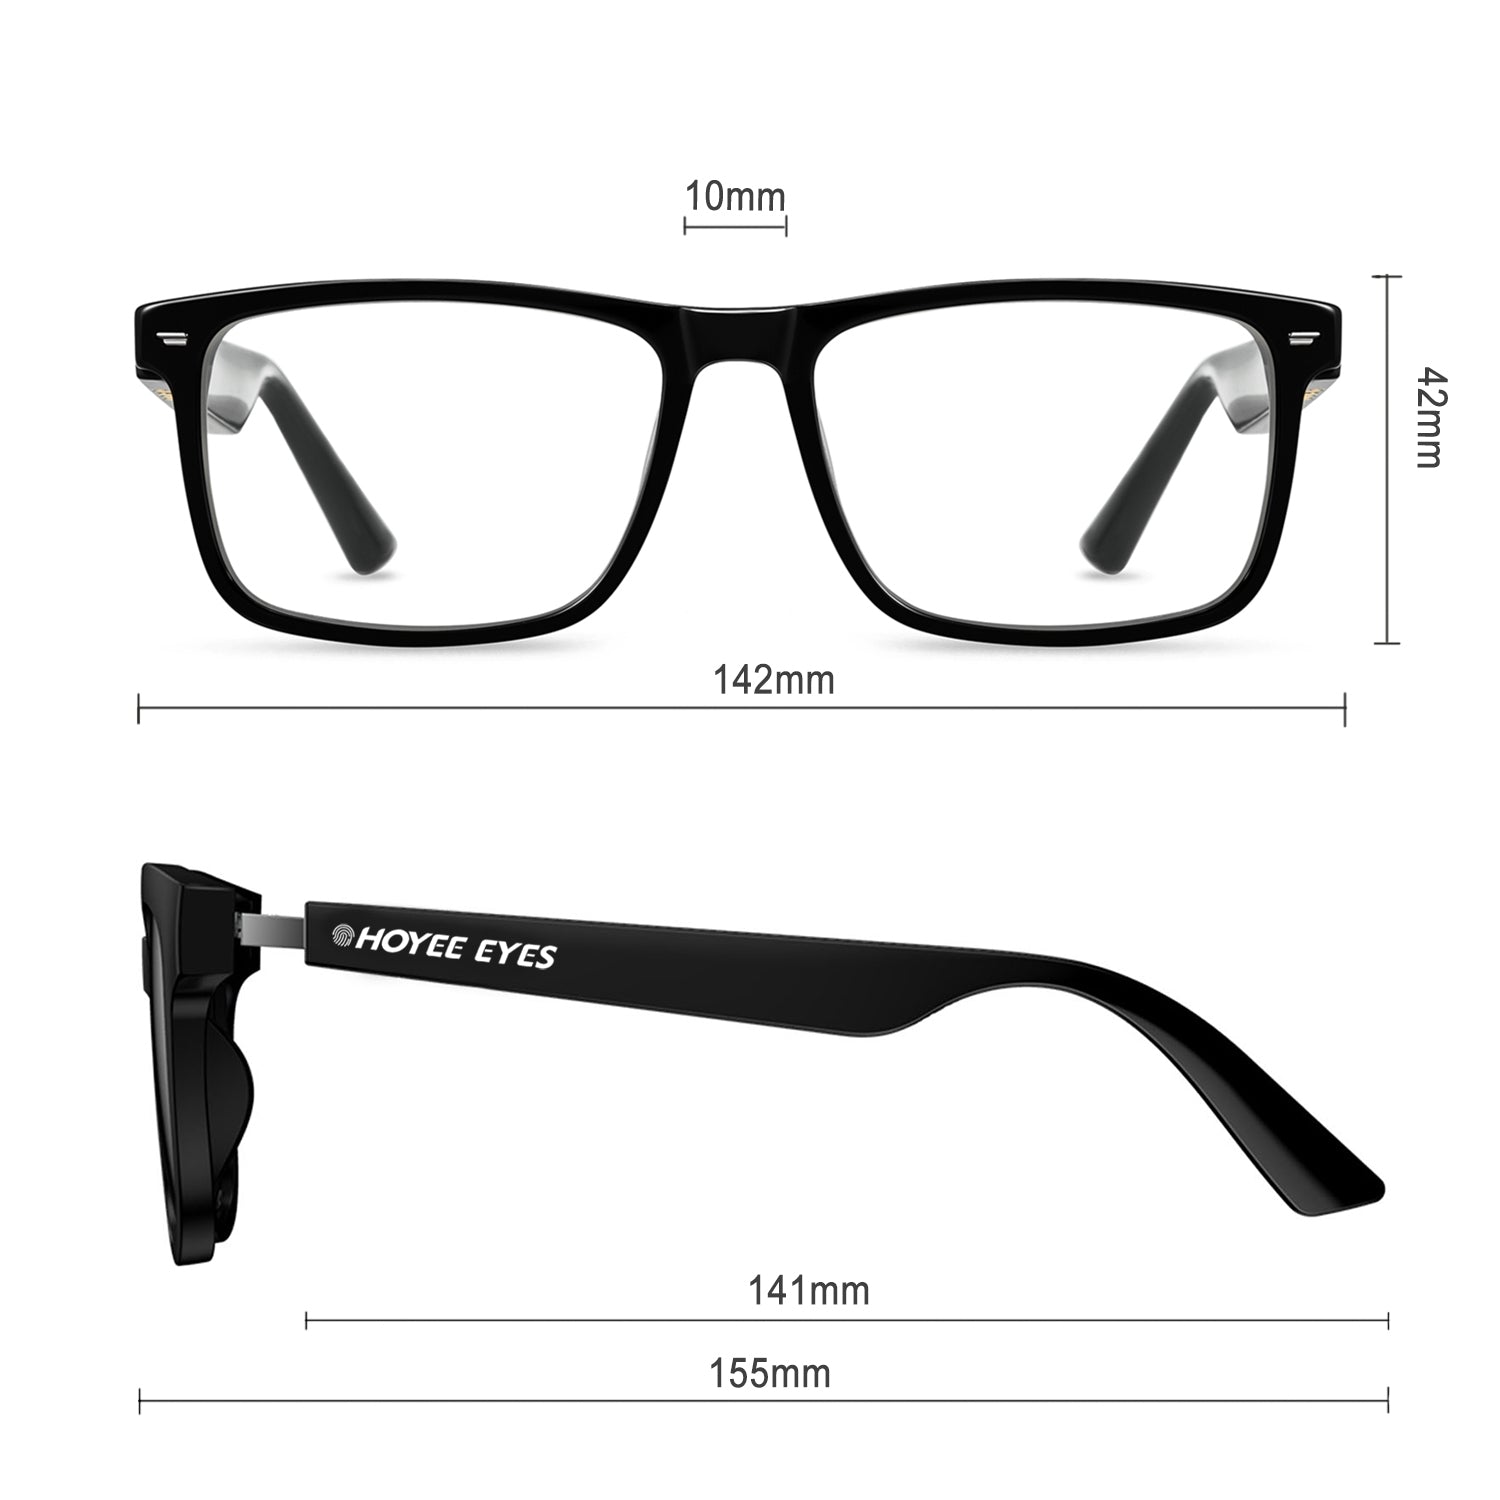 hoyee eyes envision smart glasses dimension